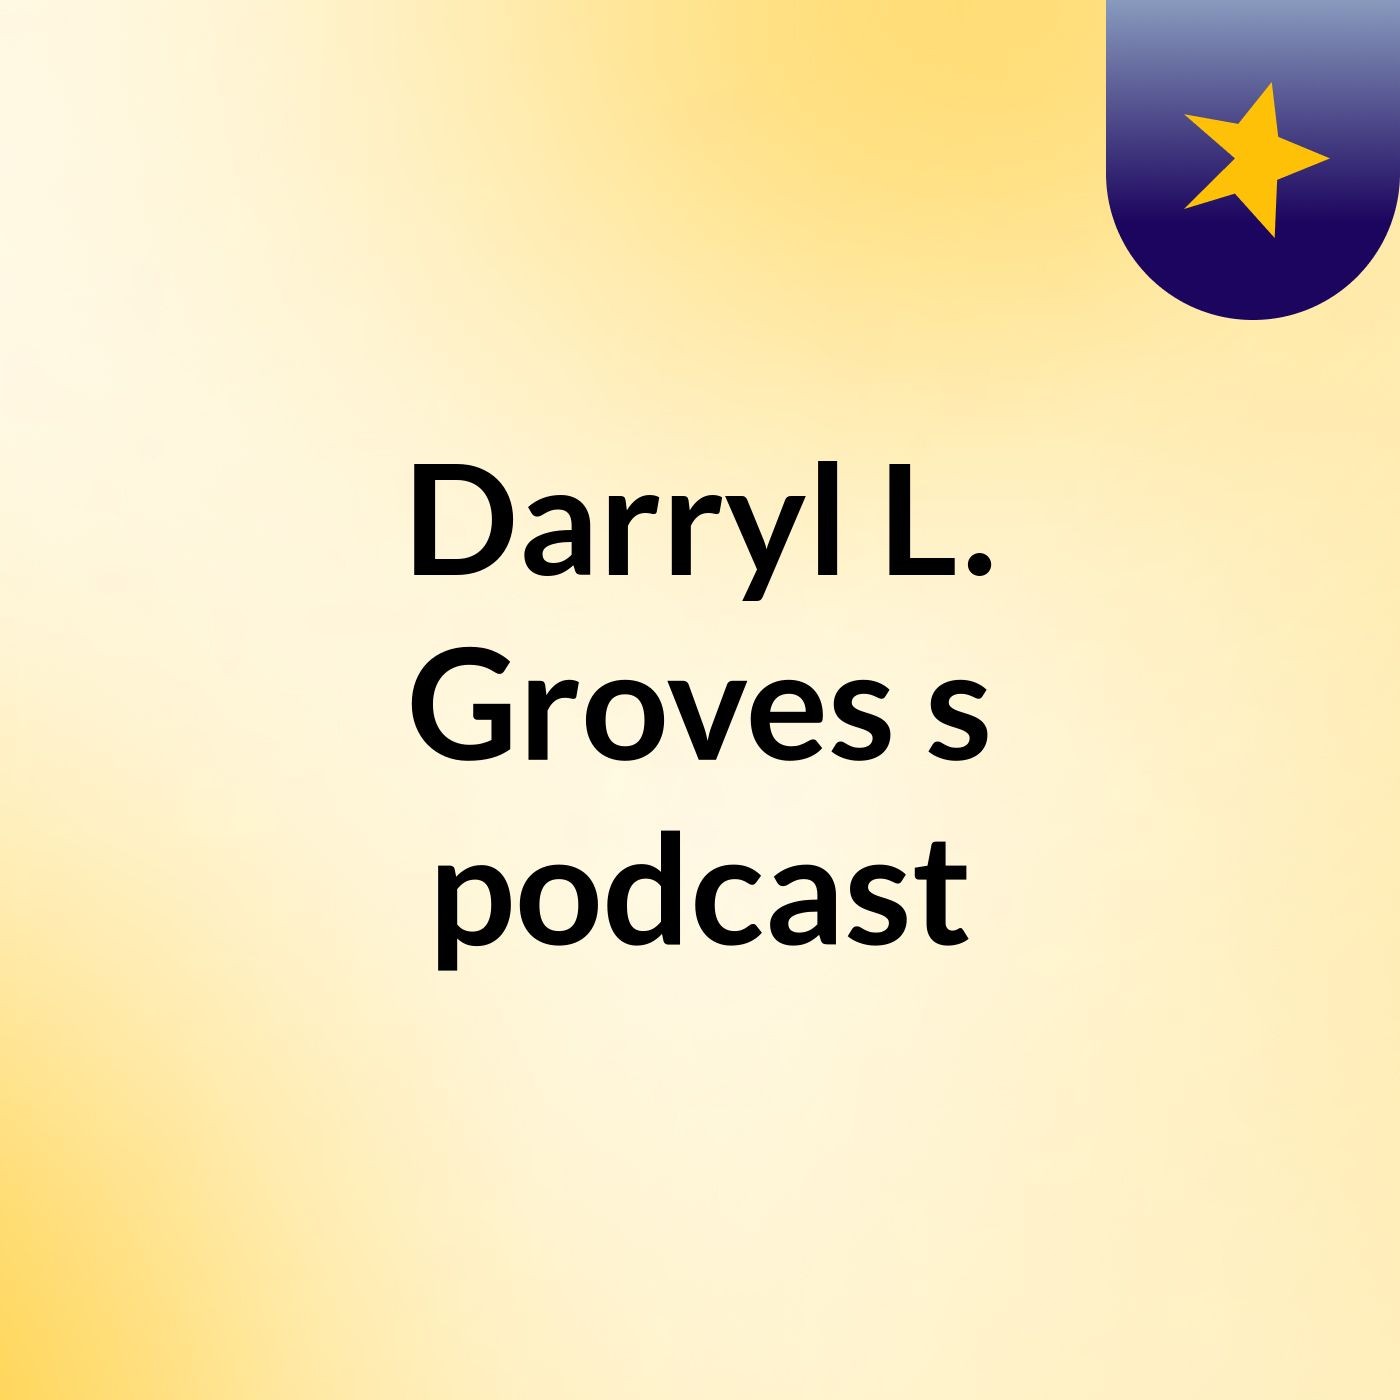 Darryl L. Groves's podcast